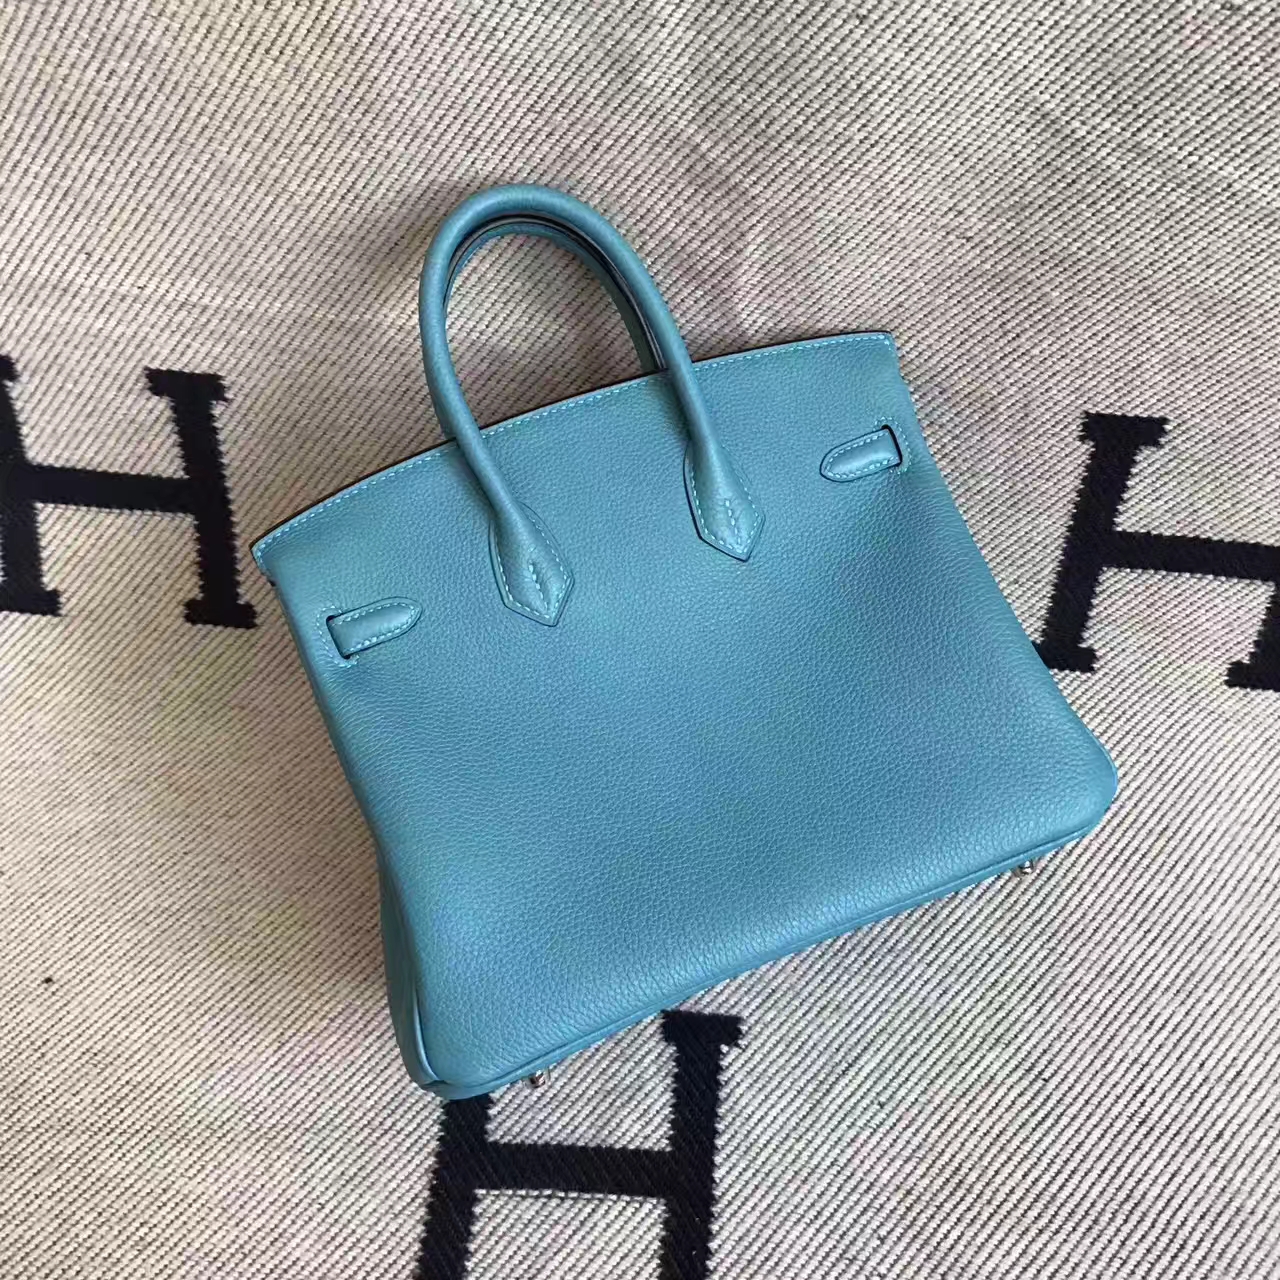 Discount Hermes Togo Calfskin Leather Birkin Bag 25cm in 7B Turquoise Blue